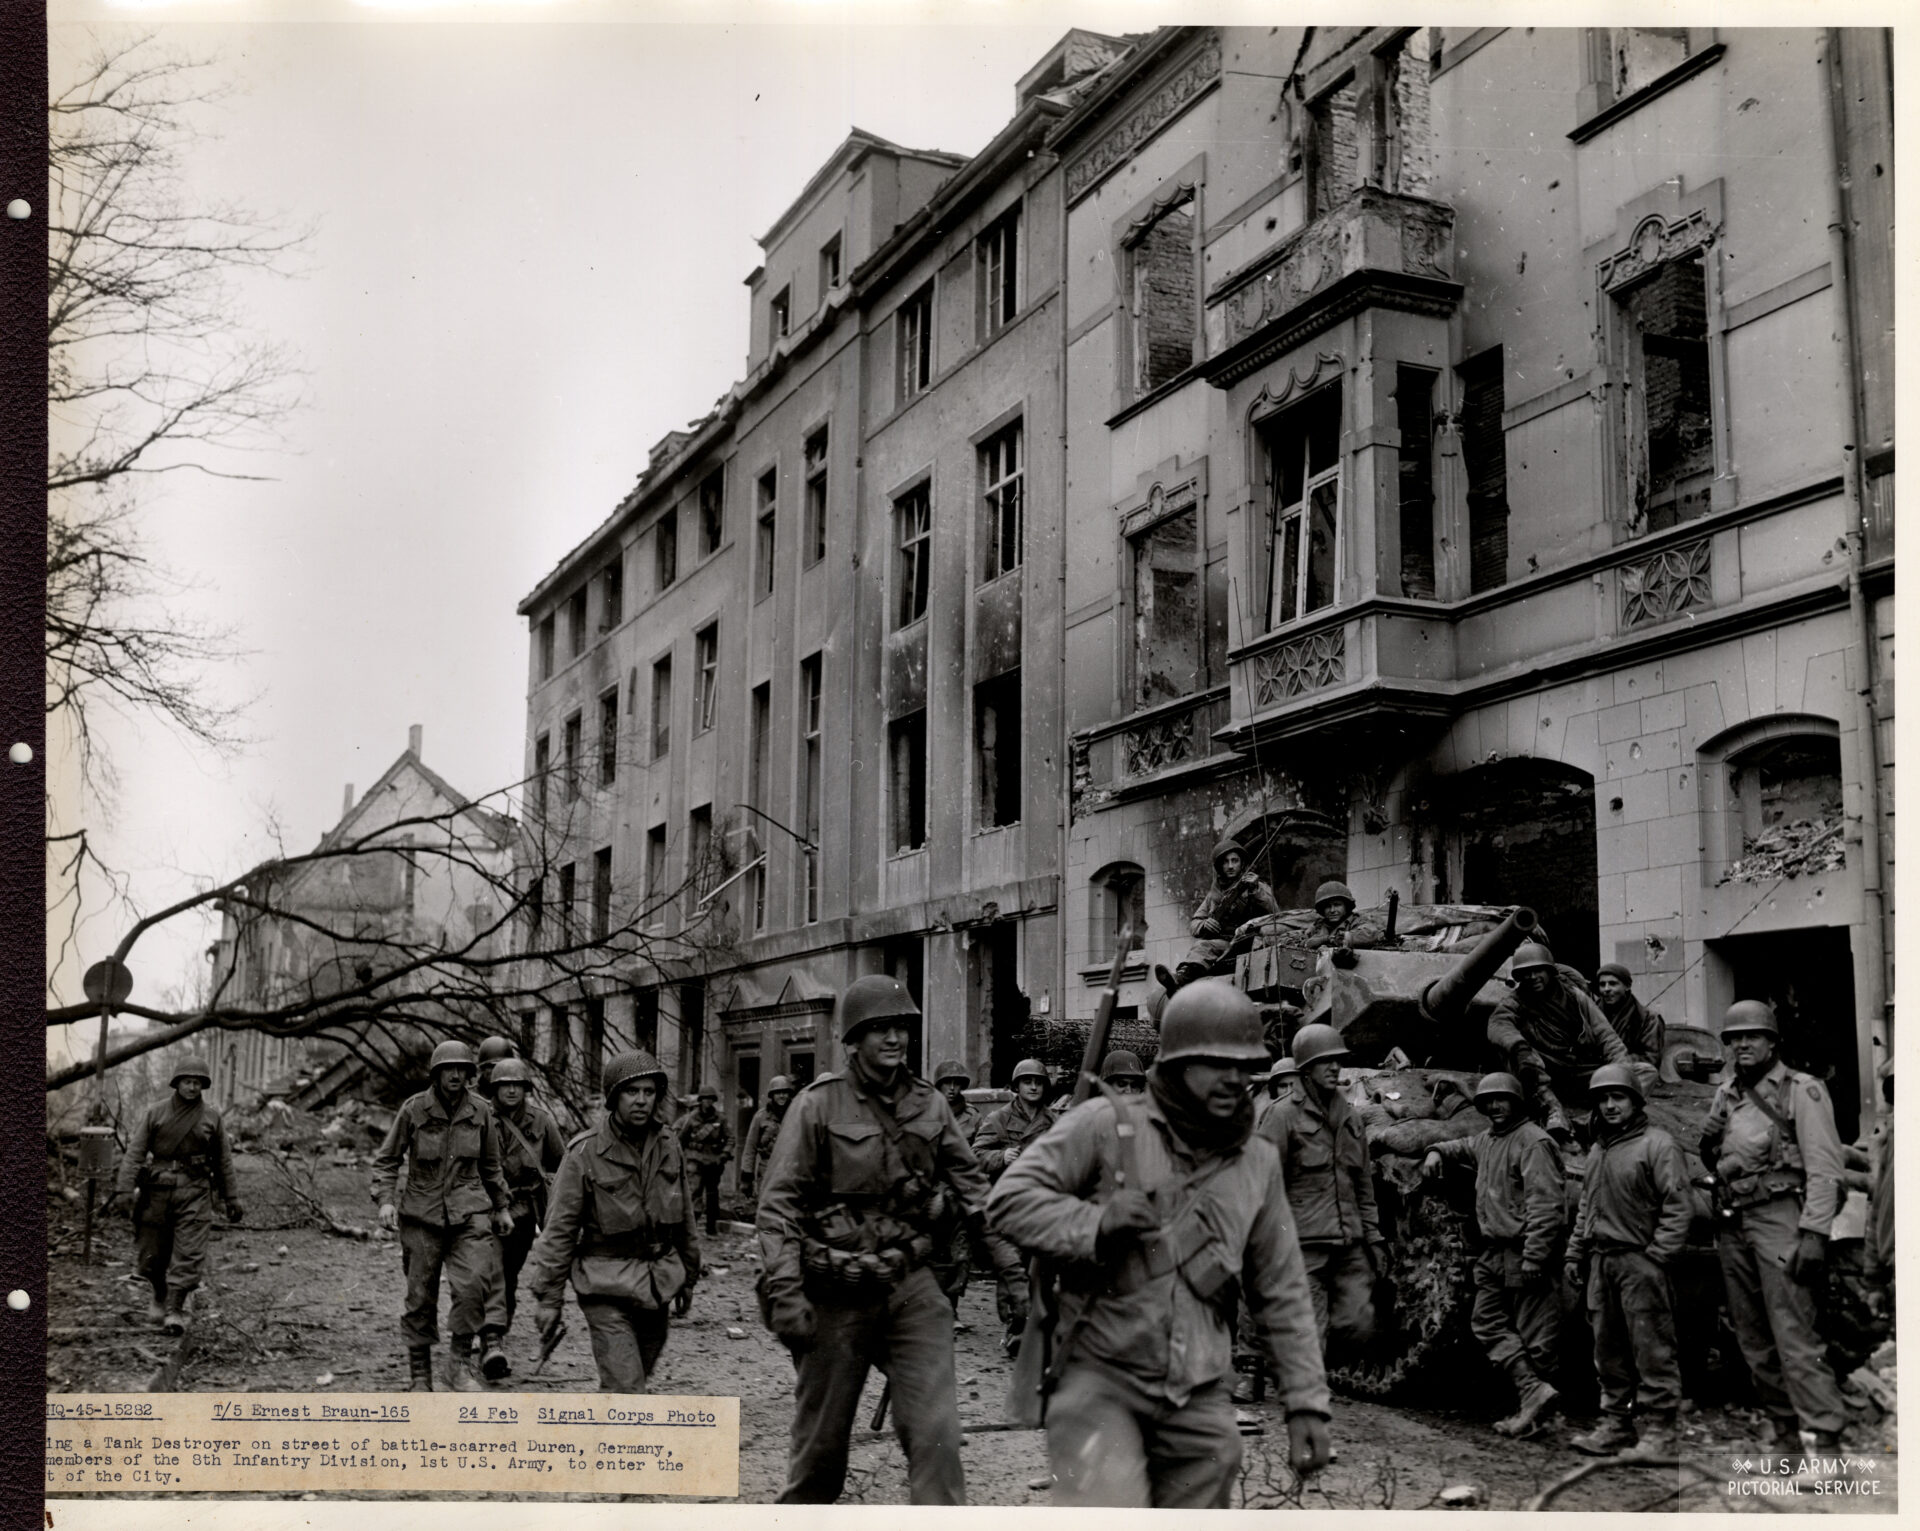 Infantrymen entering into the city of Duren in Germany